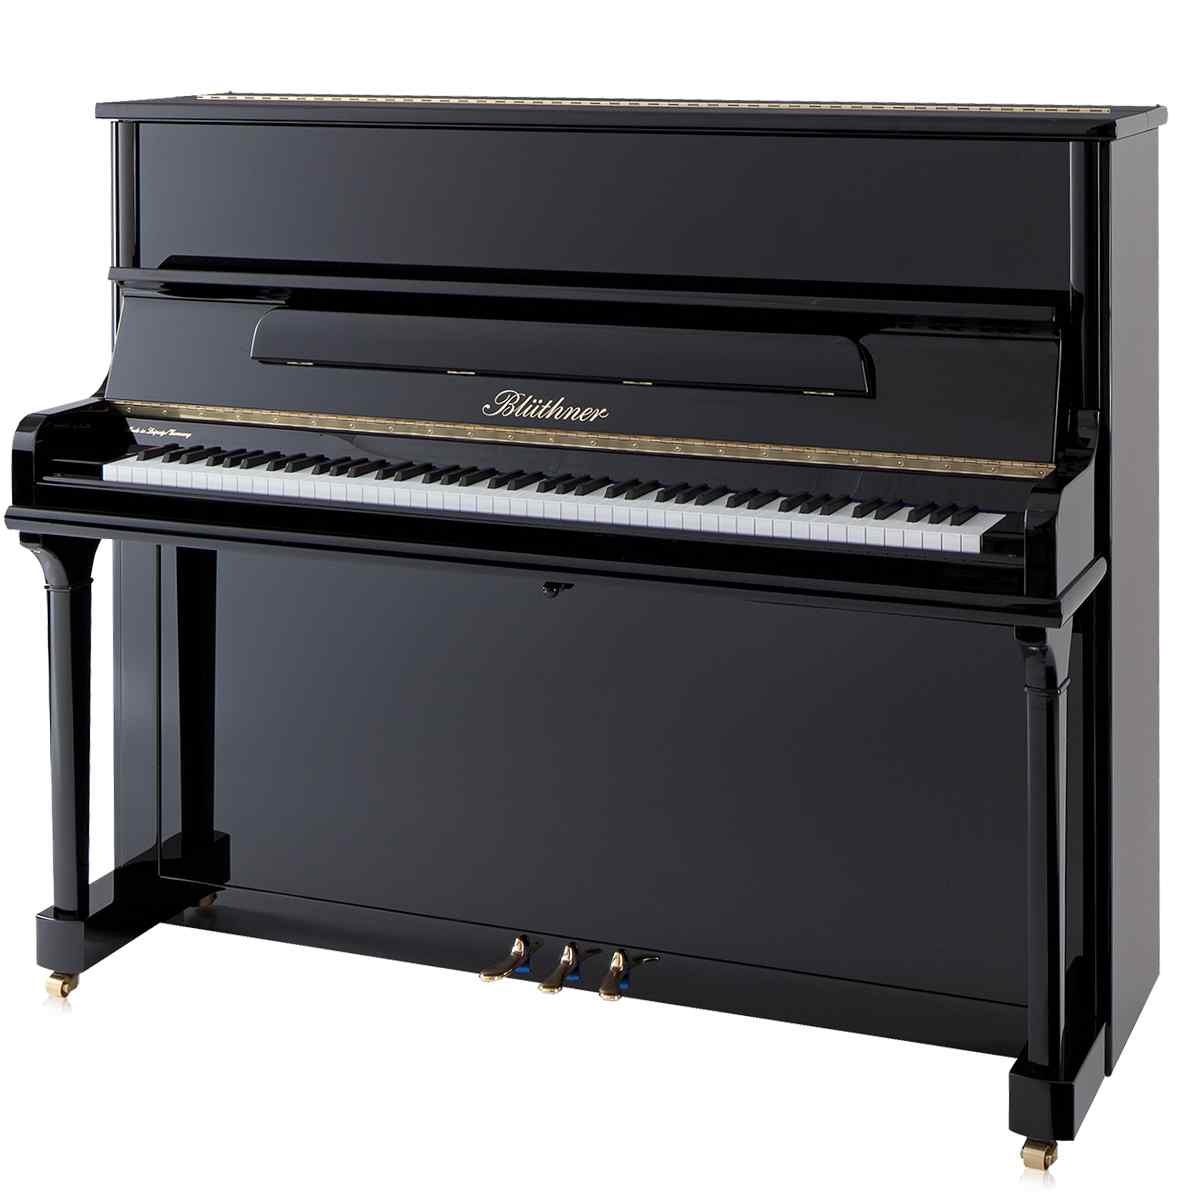 bluthner model a piano thumbnail 1180x1200 1 פסנתר אקוסטי 10